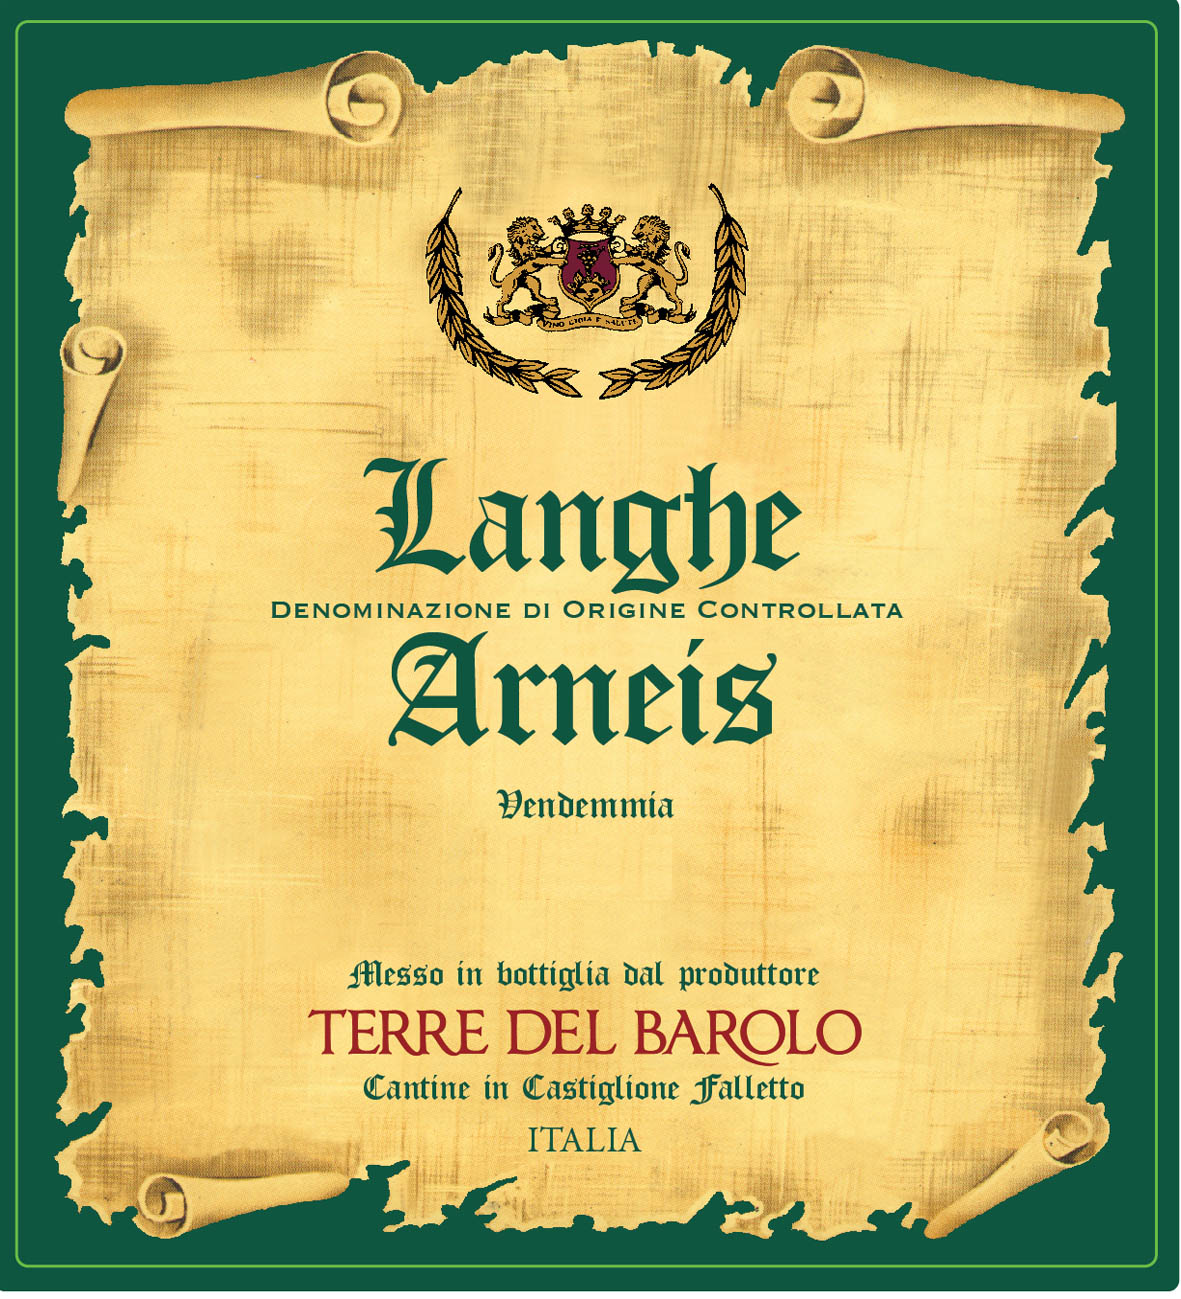 Terre del Barolo - Langhe Arneis label